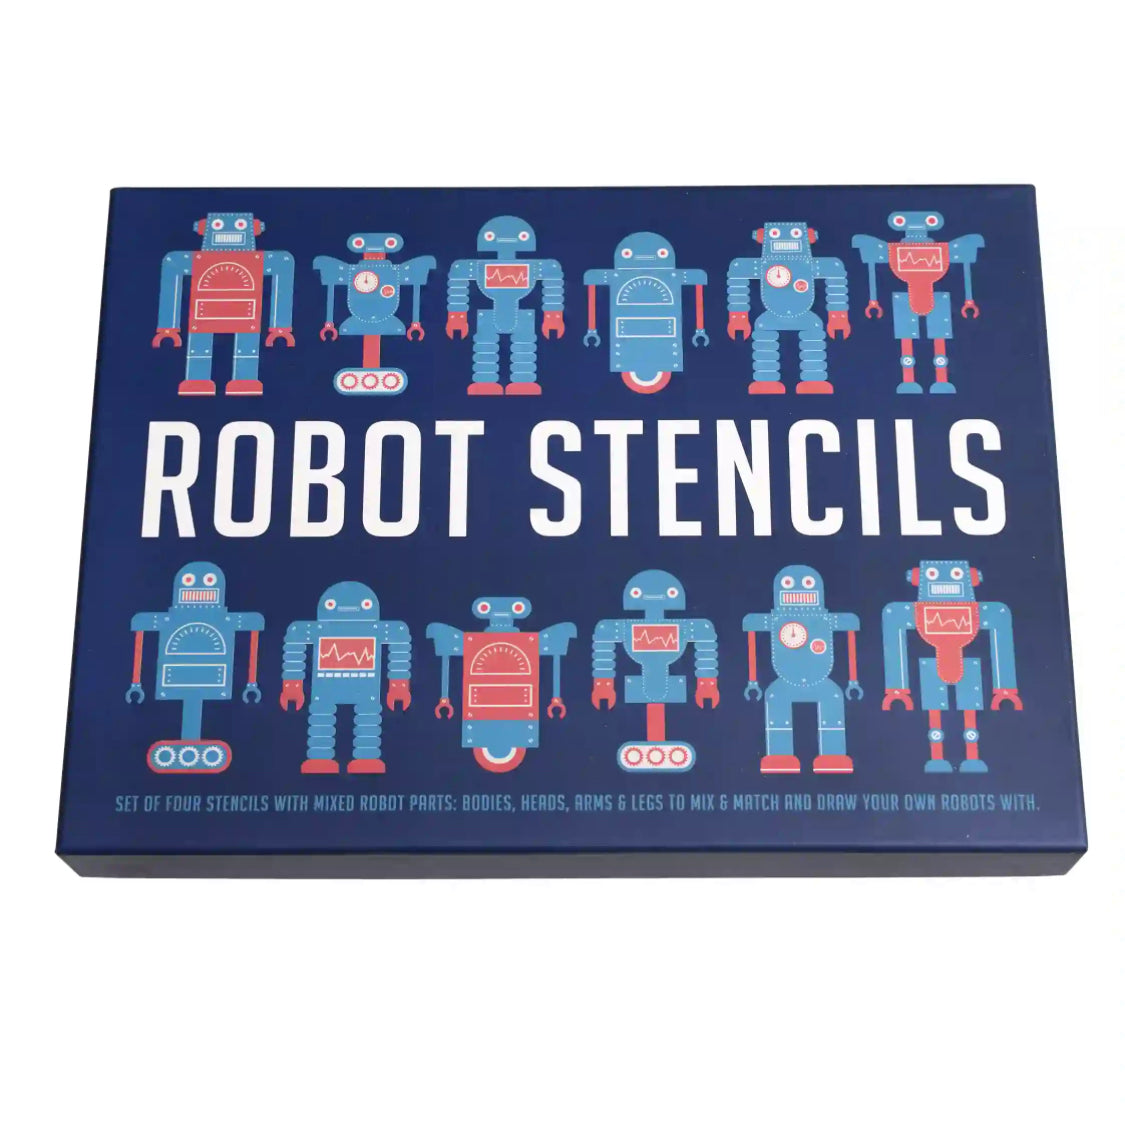 Draw your own robots stencil set